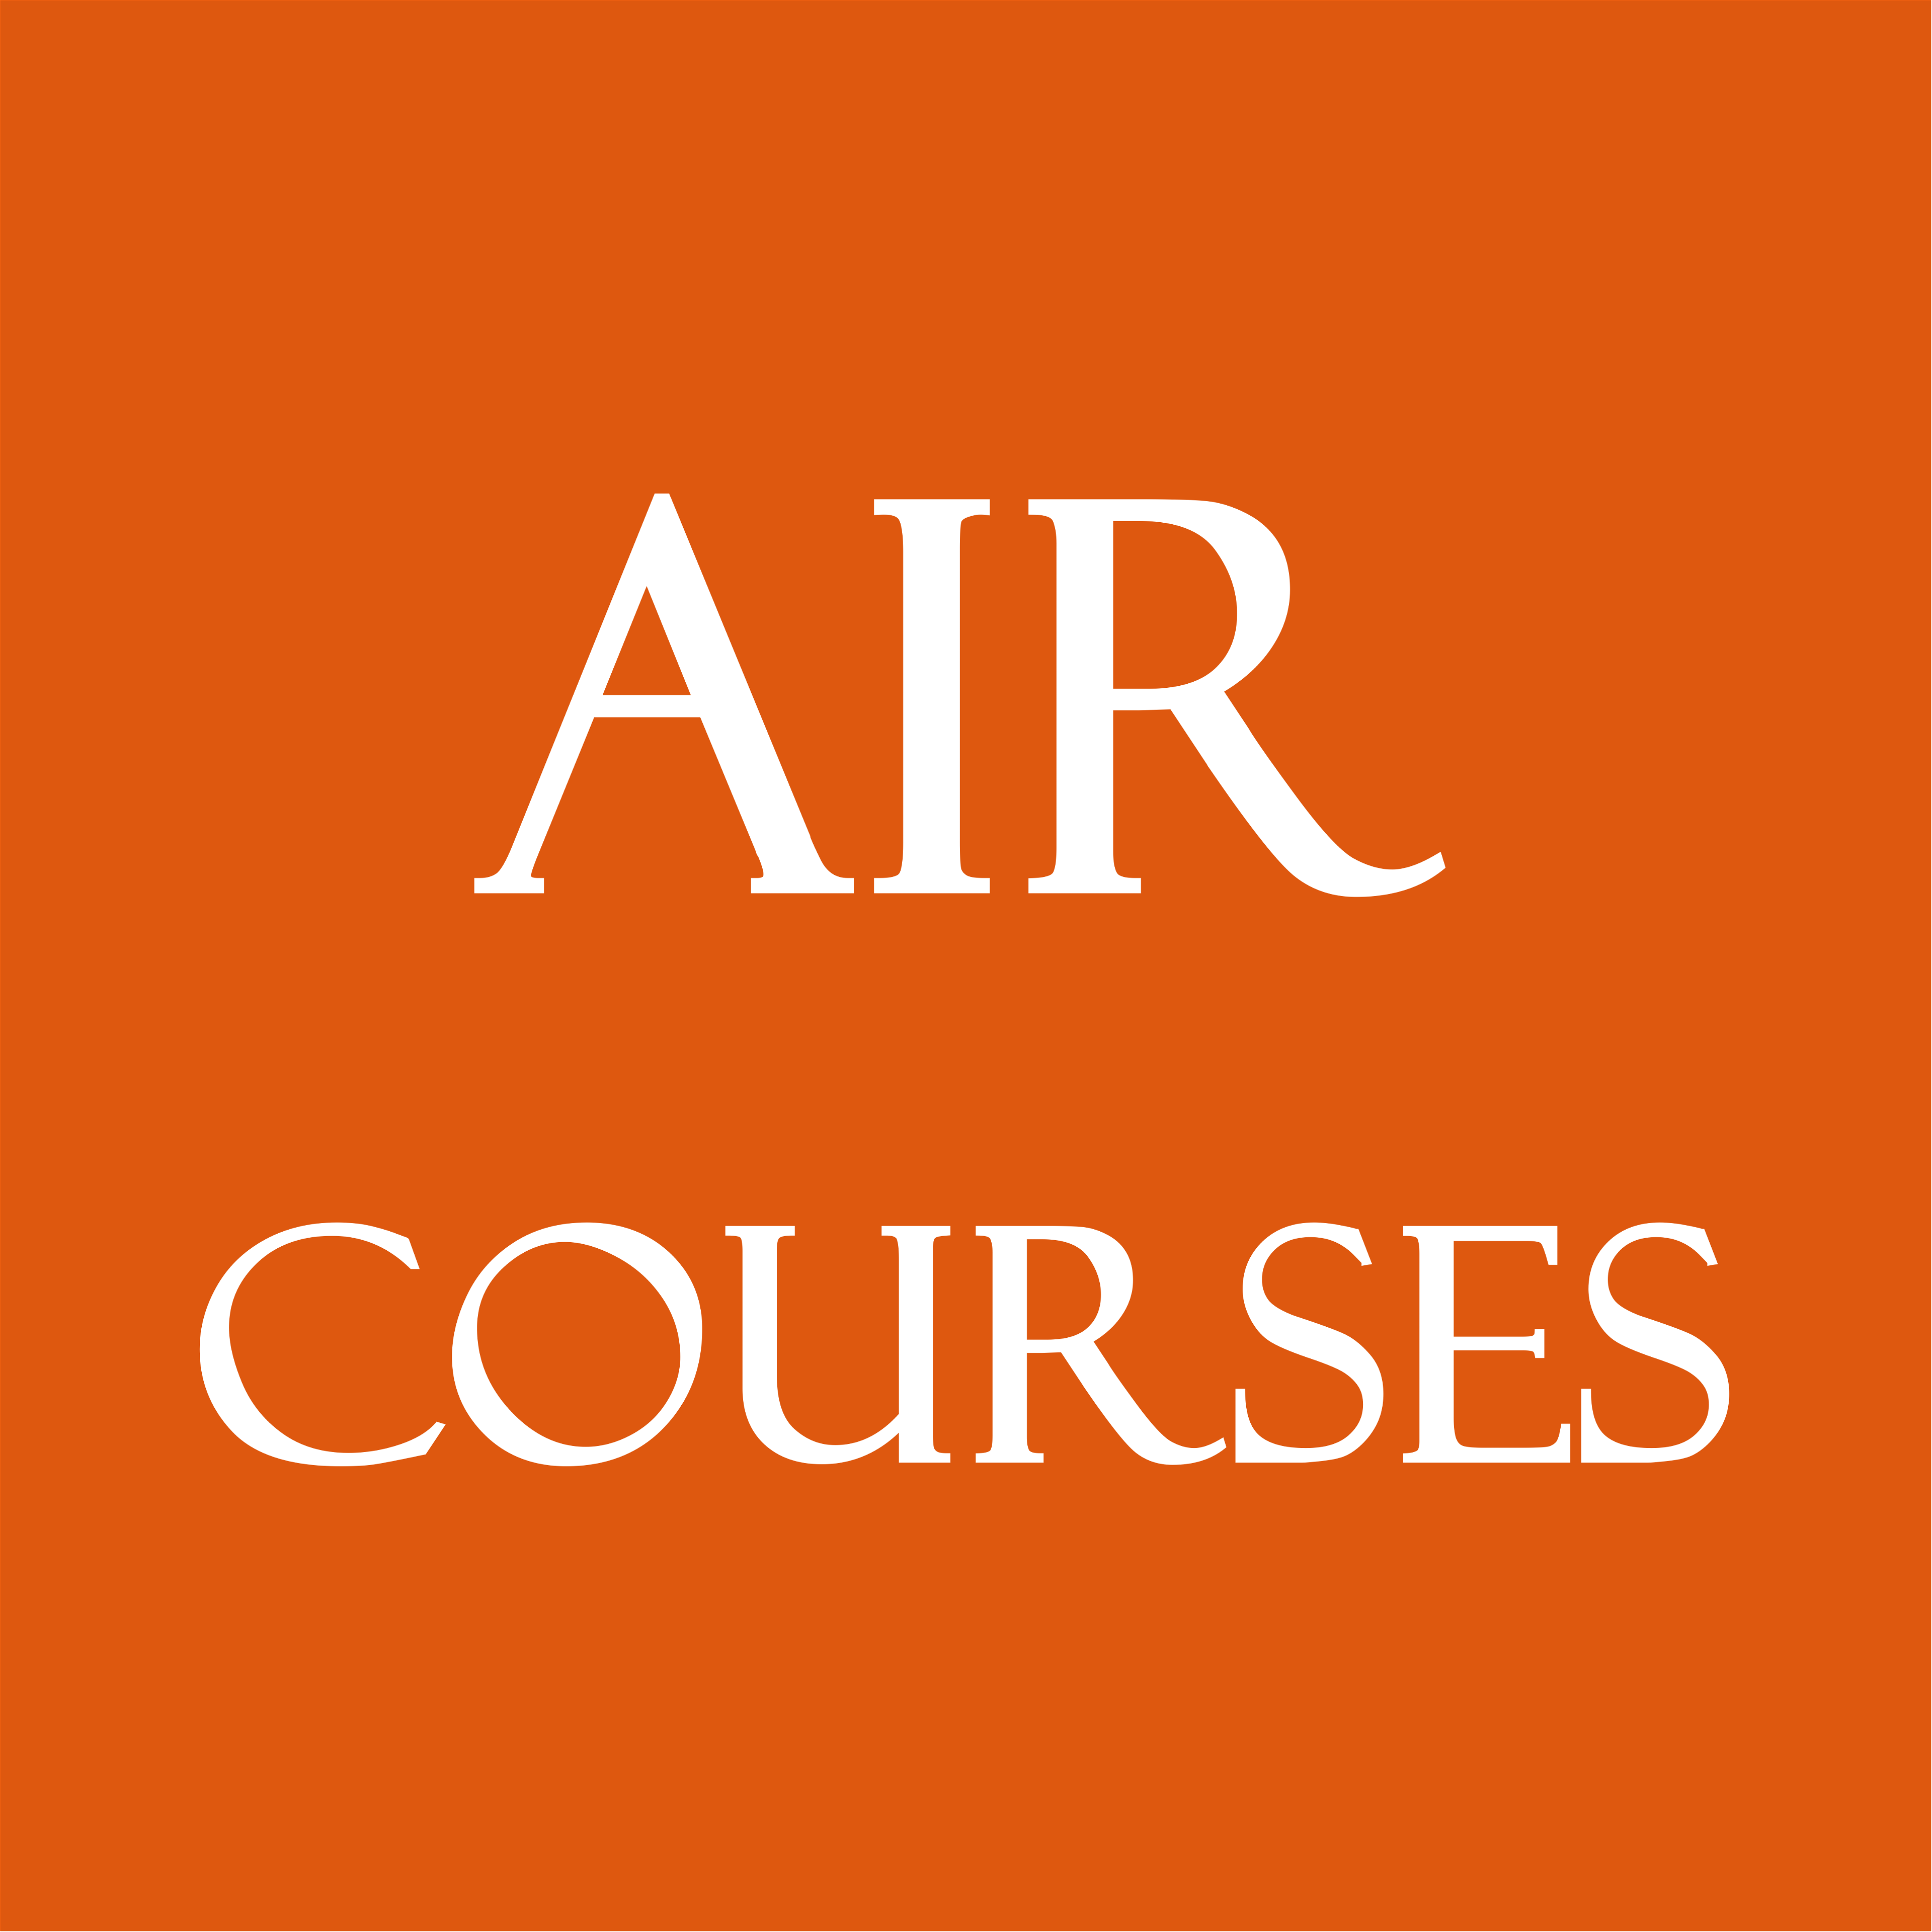 AIR Courses, London